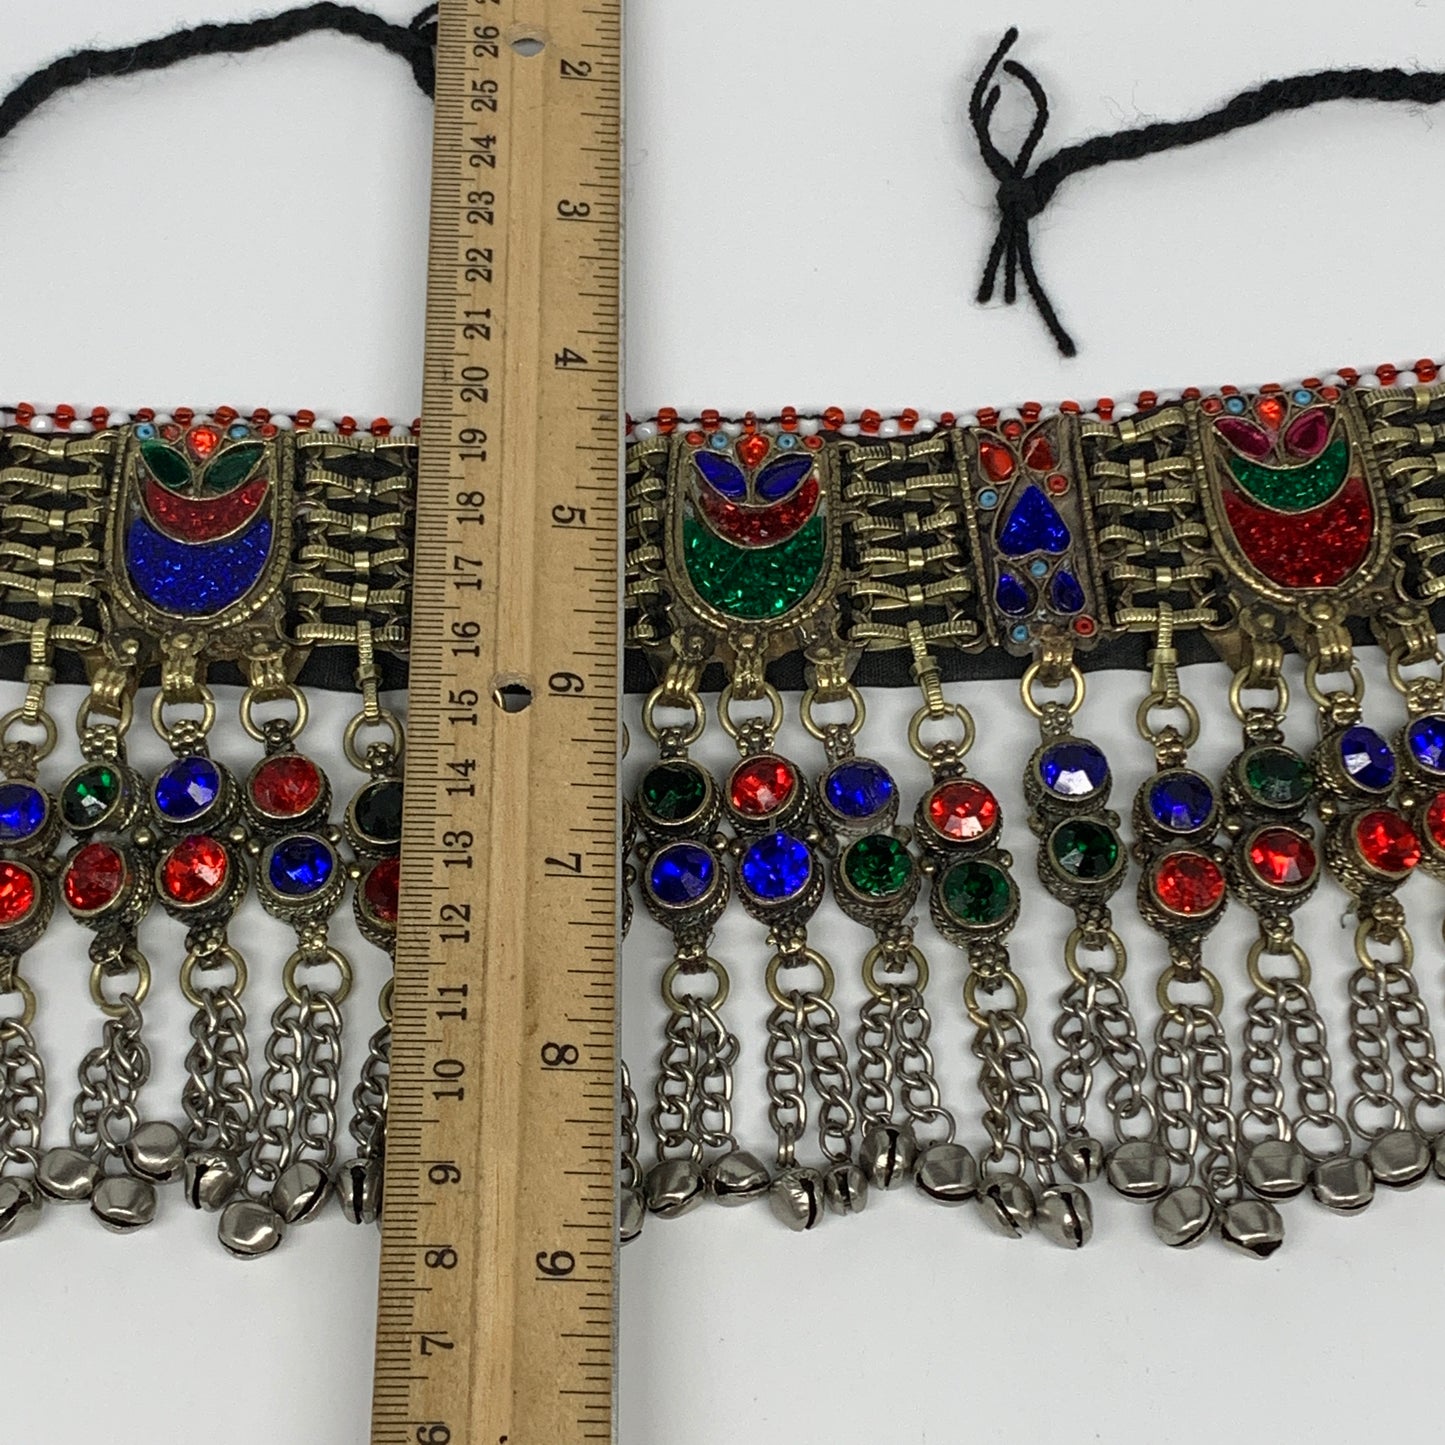 300g, 12"x4.25"Kuchi Choker Necklace Multi-Color Tribal Gypsy Bohemian,B14093